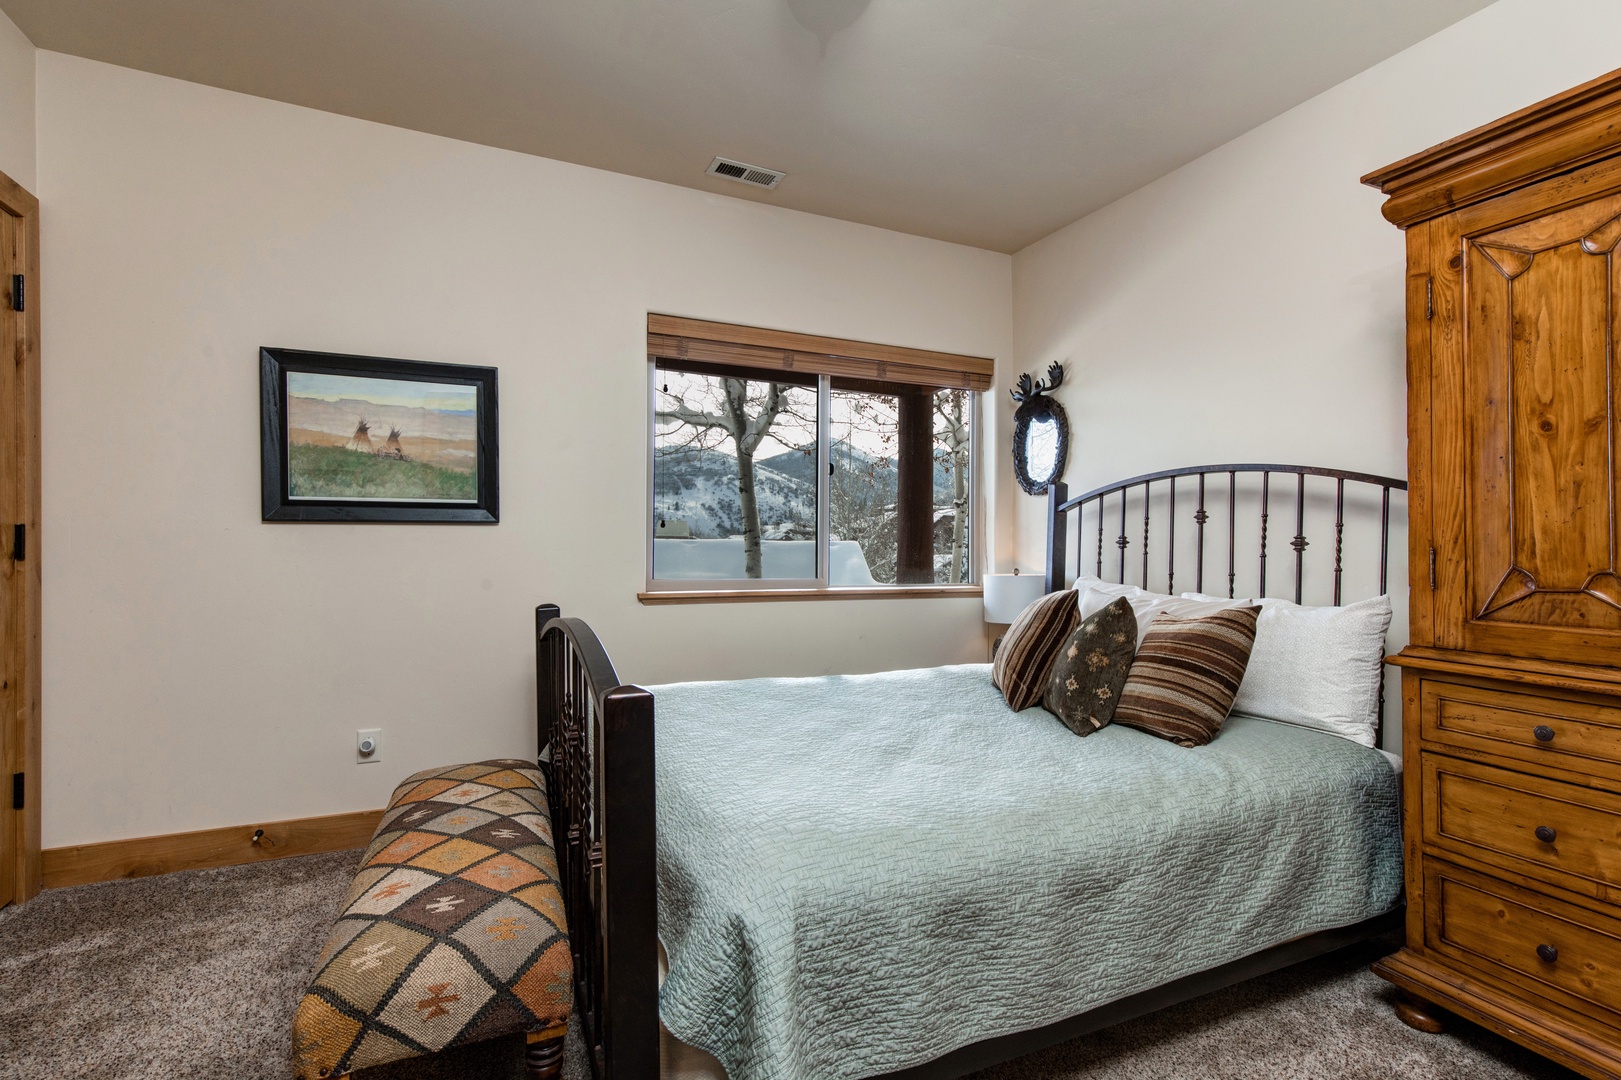 Park City Vacation Rentals, Cedar Ridge Townhouse - 4th bedroom